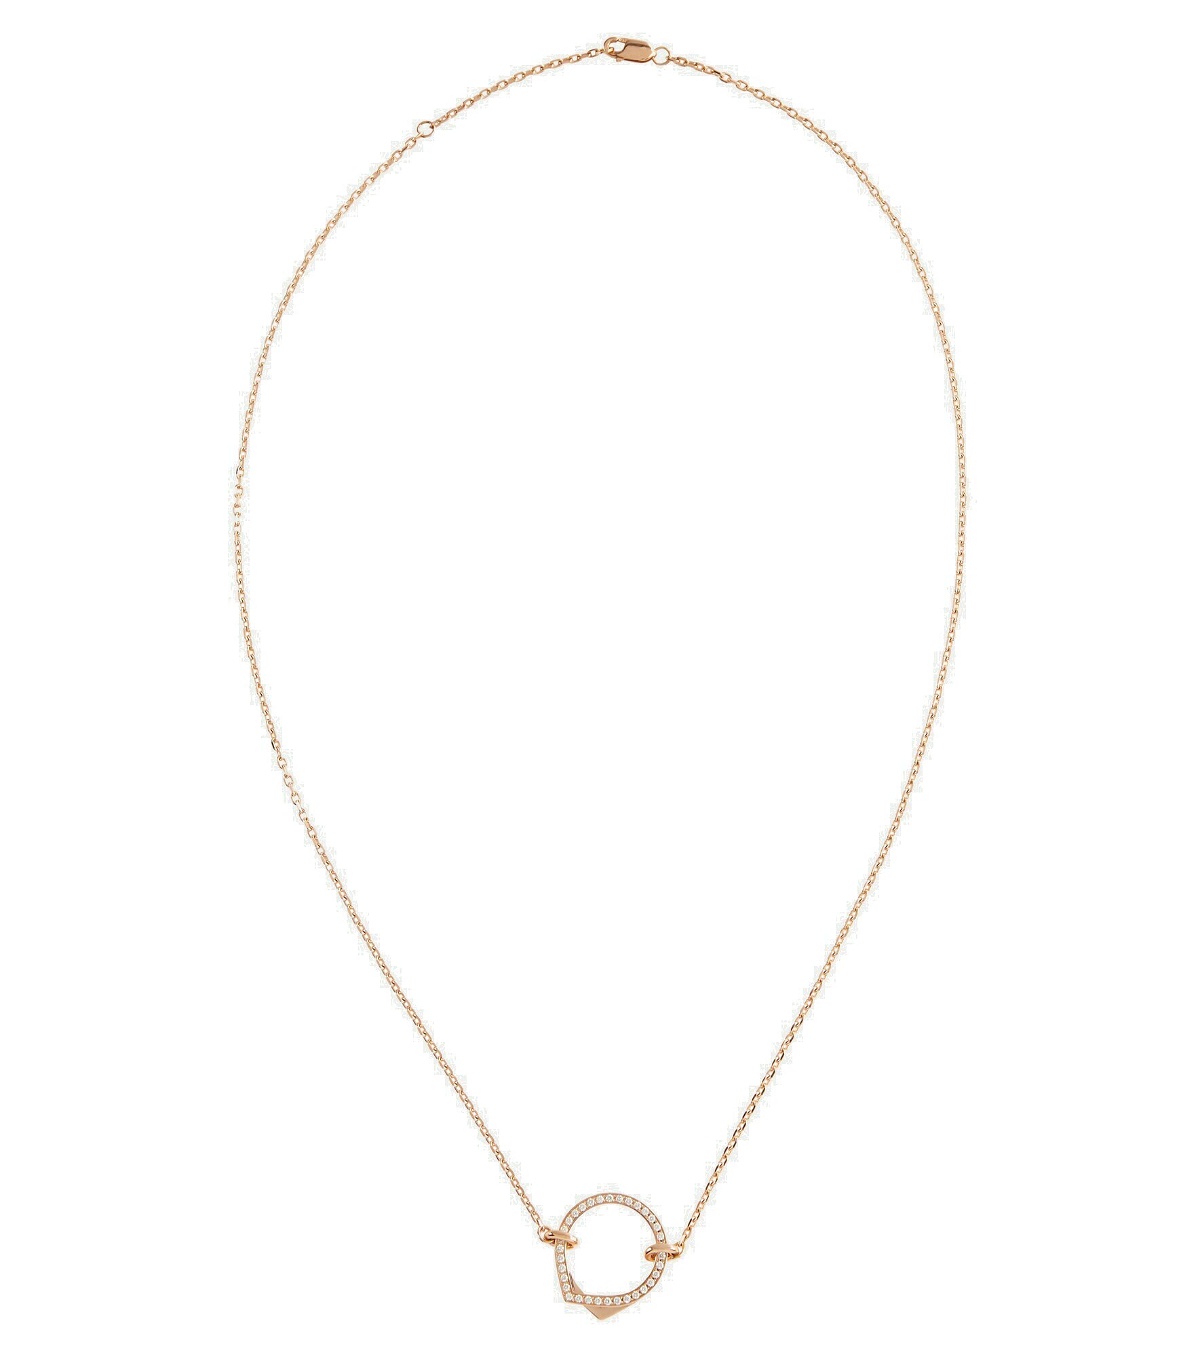 Repossi - Antifer 18kt rose gold necklace with diamonds Repossi